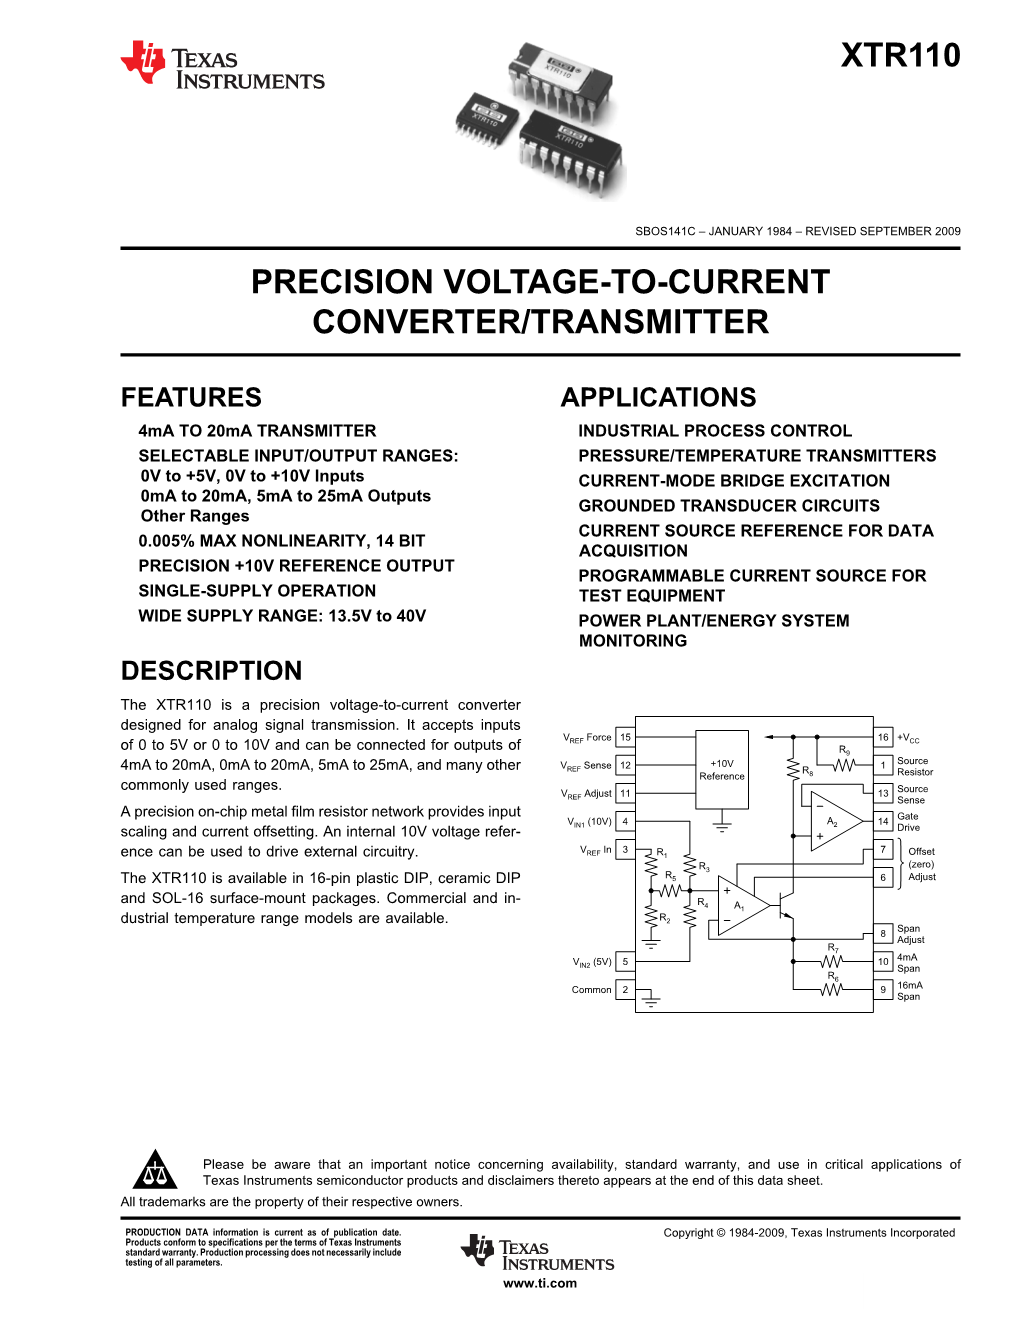 Precision Voltage-To-Current Converter/Transmitter Xtr110